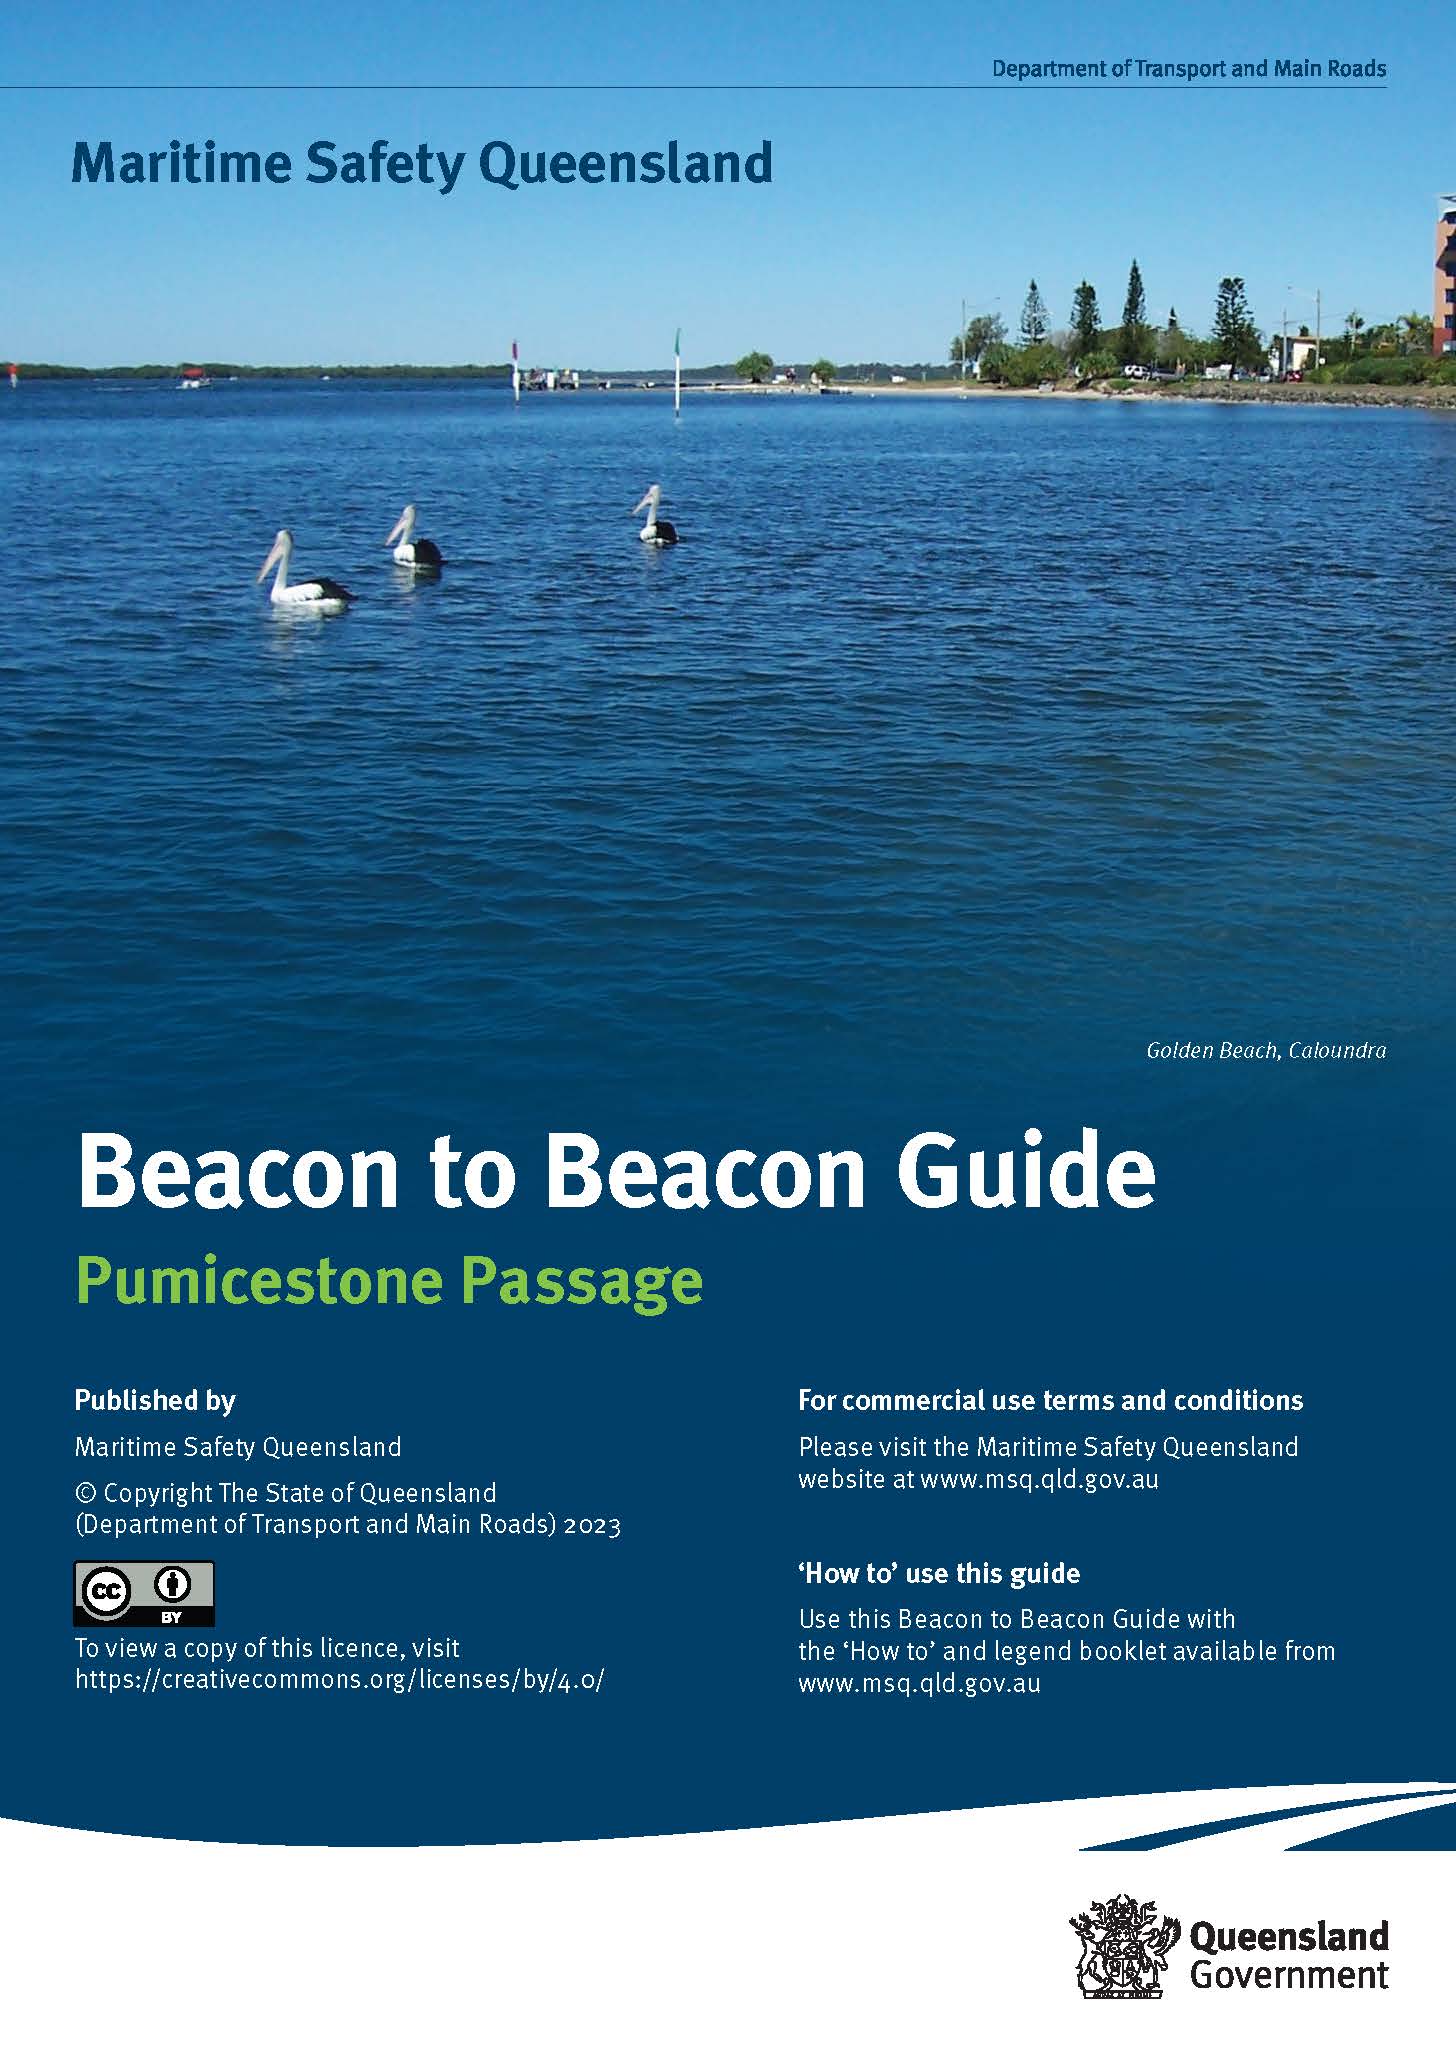 Beacon to Beacon Guide—Pumicestone Passage